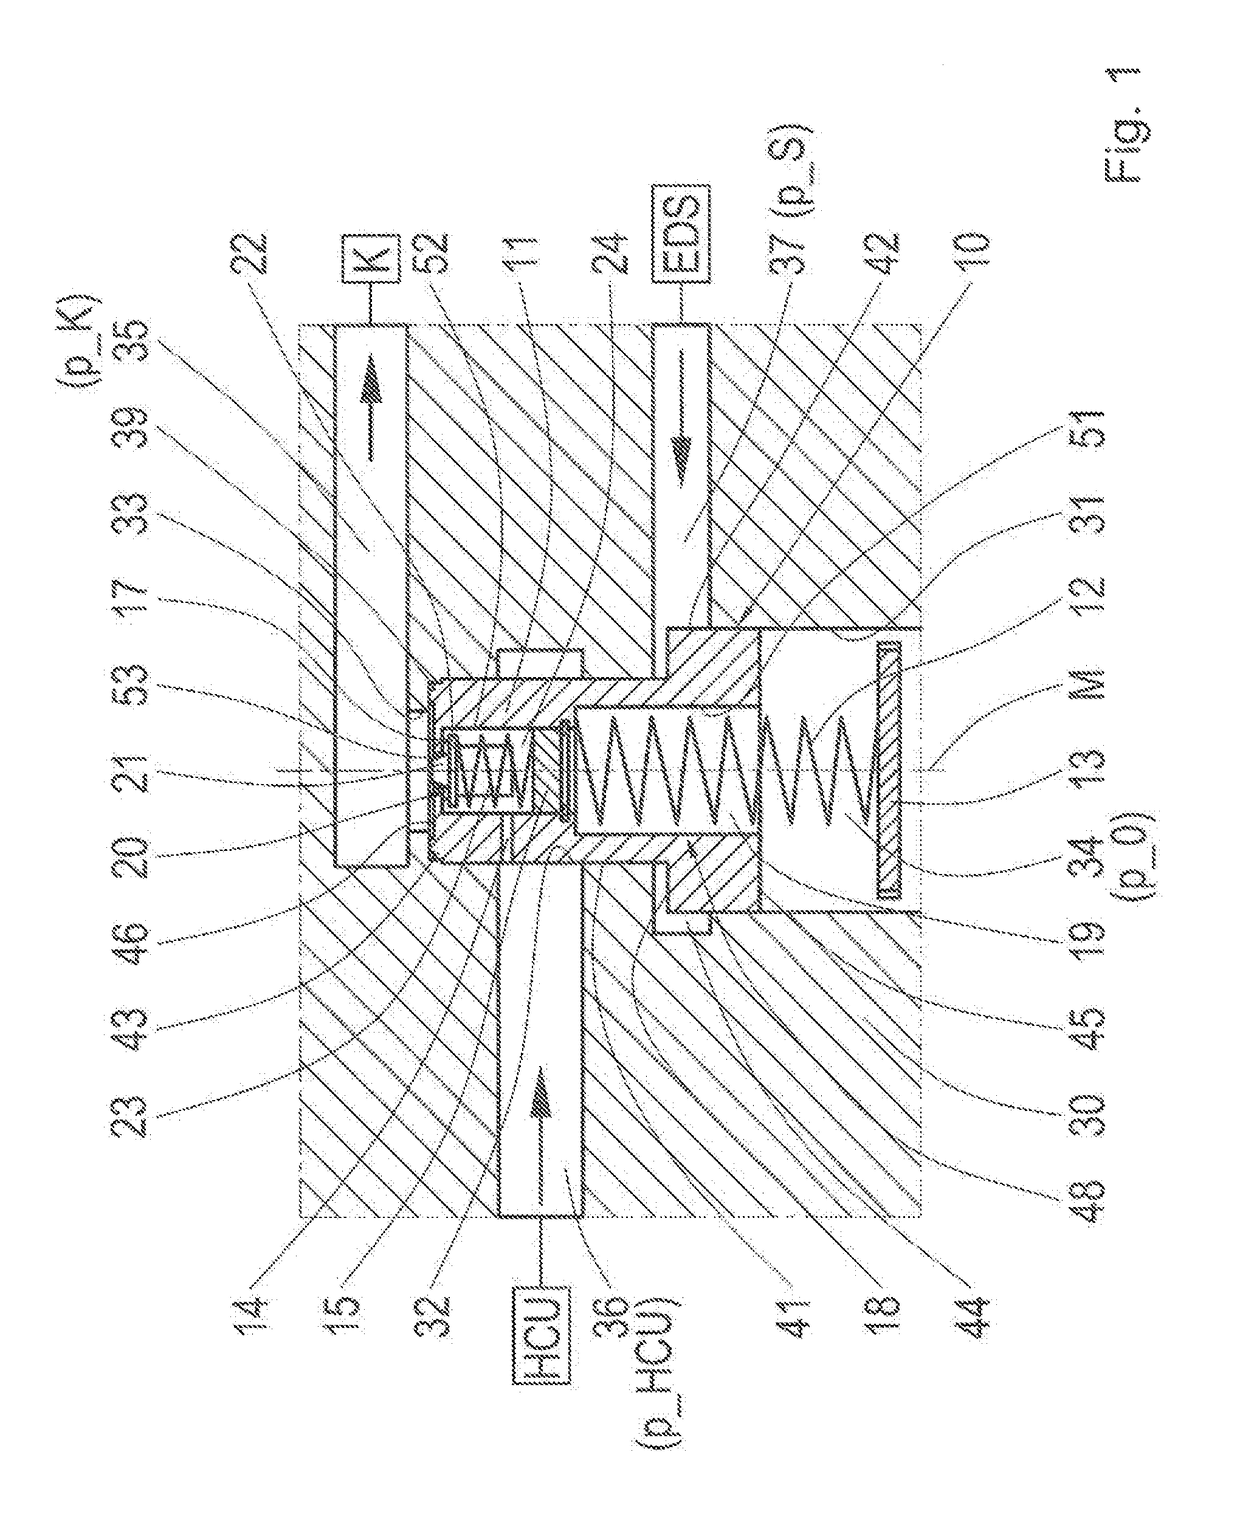 Hydraulic control arrangement for an automatic transmission